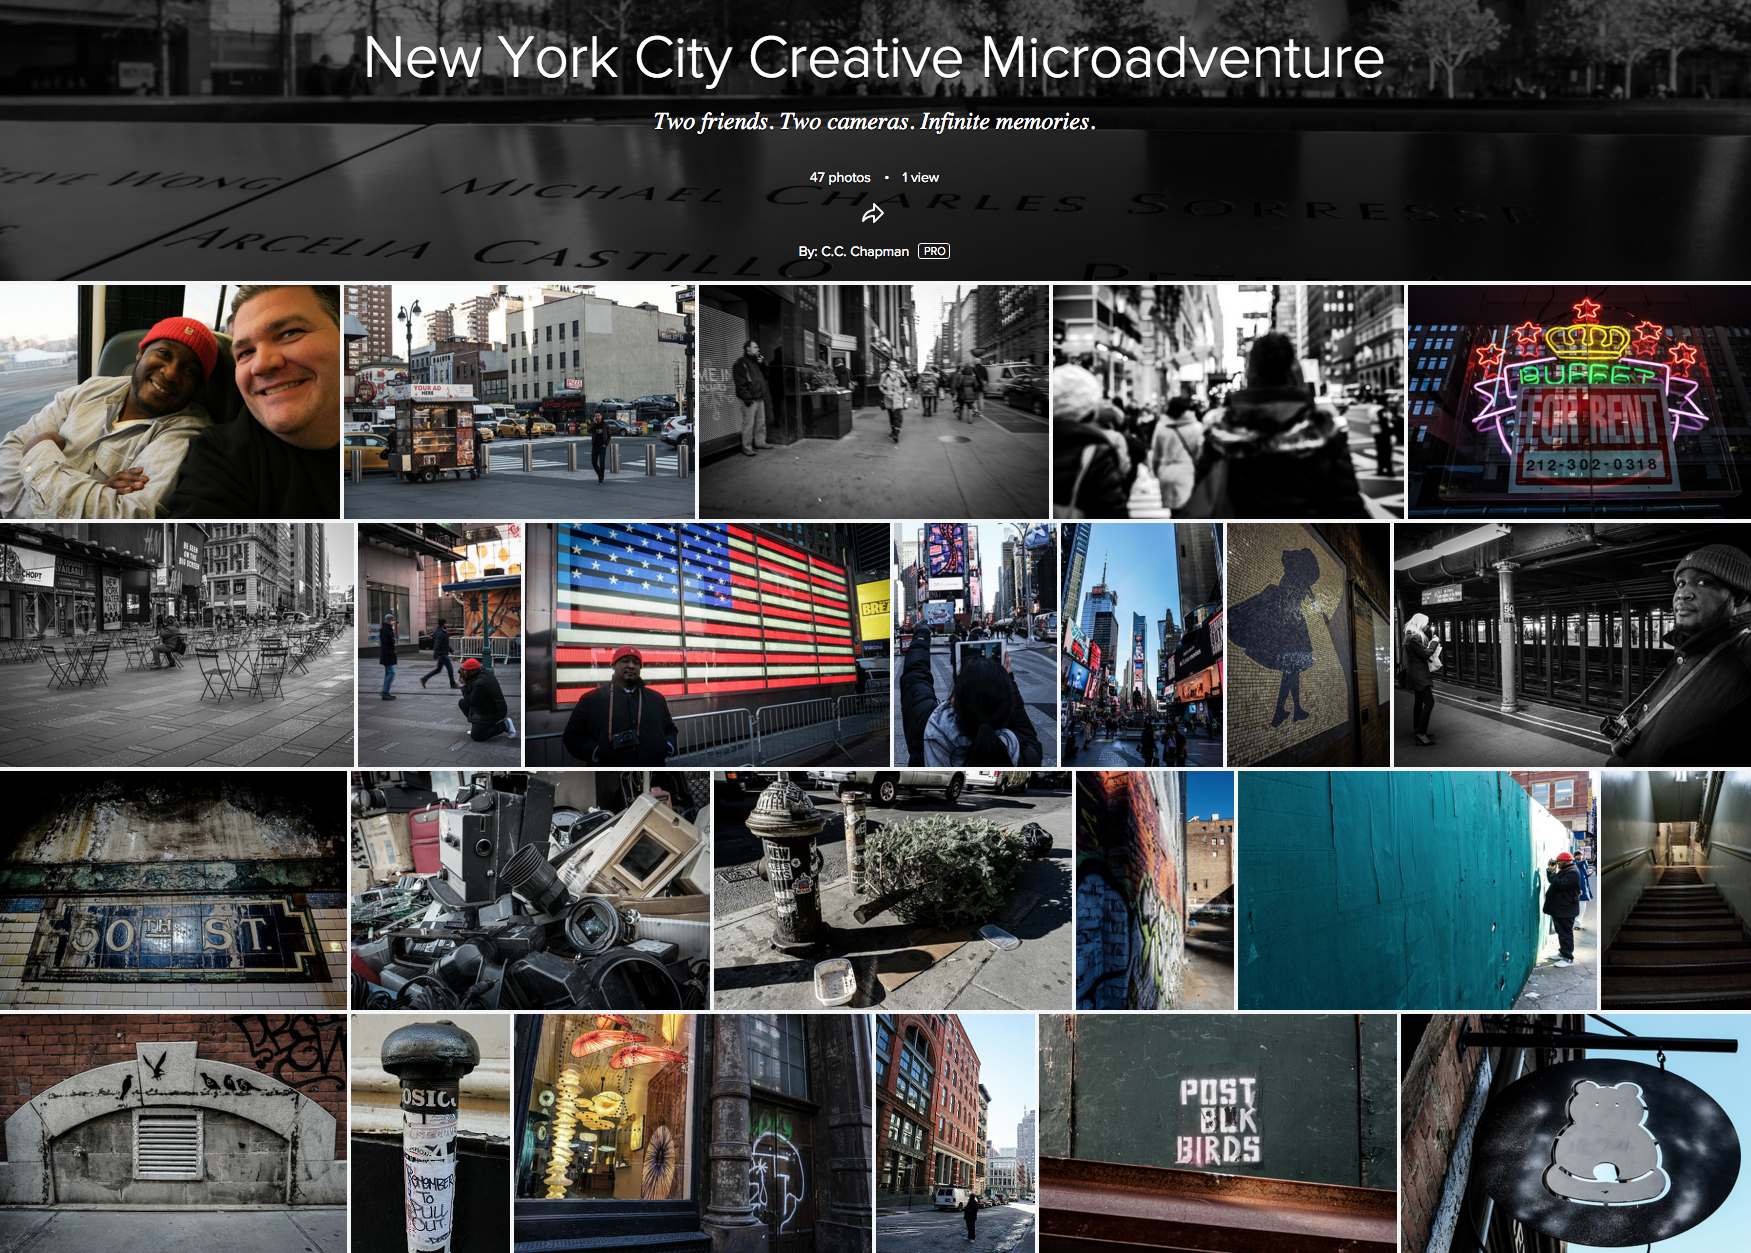 NYC Creative Microadventure Photos by C.C. Chapman